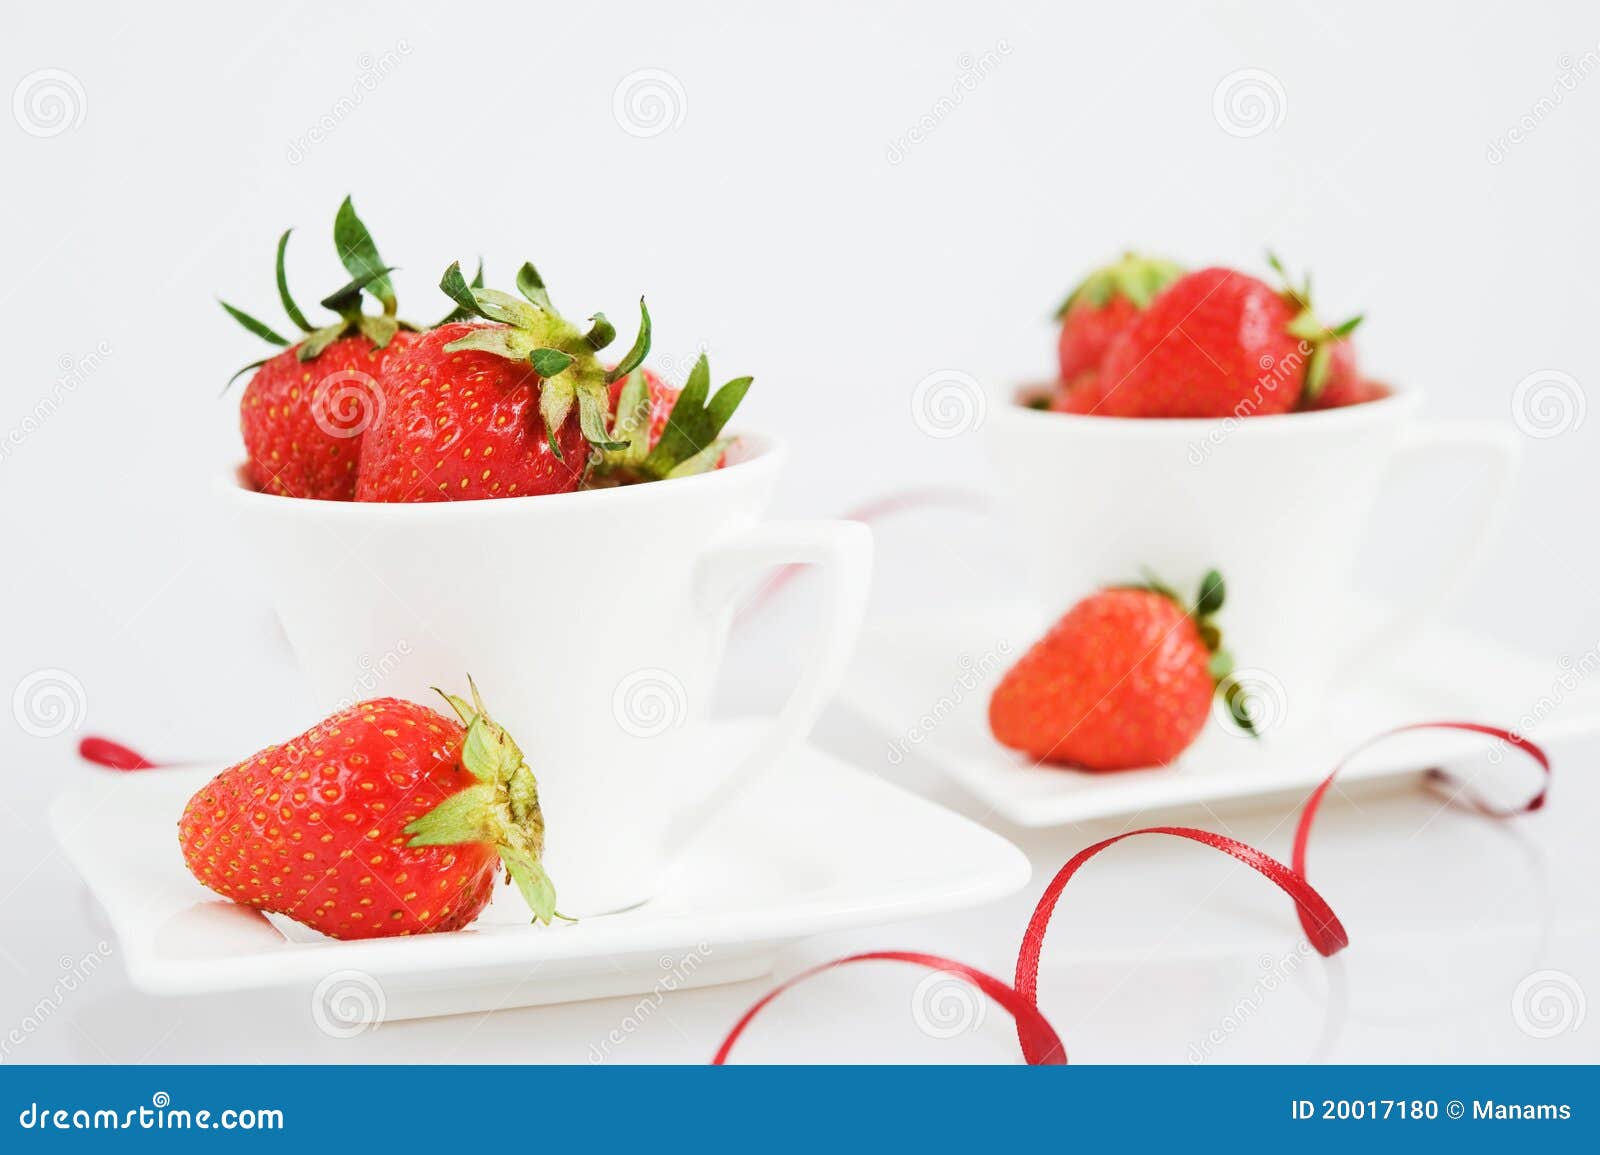 strawberry tea clipart - photo #28